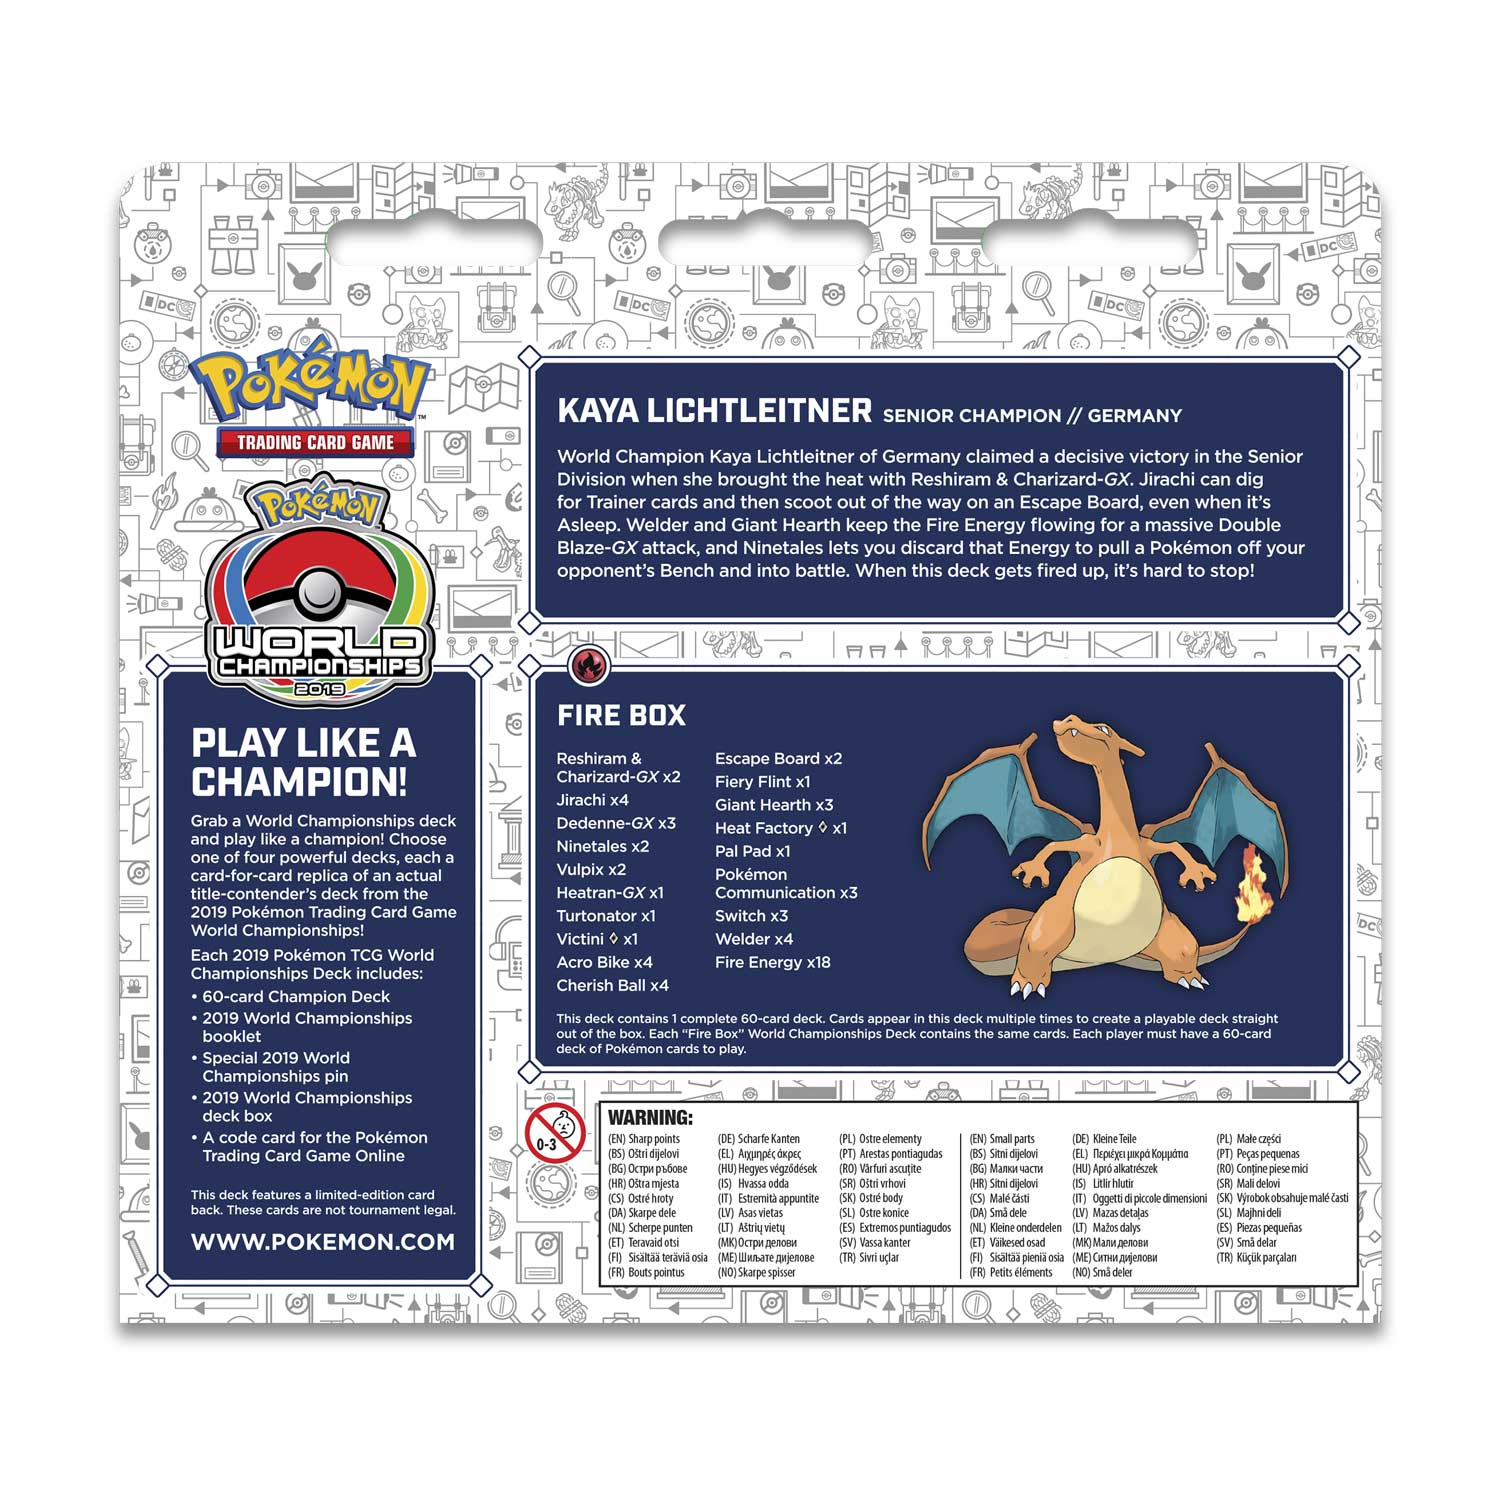 Start Planning for the 2022 Pokémon World Championships